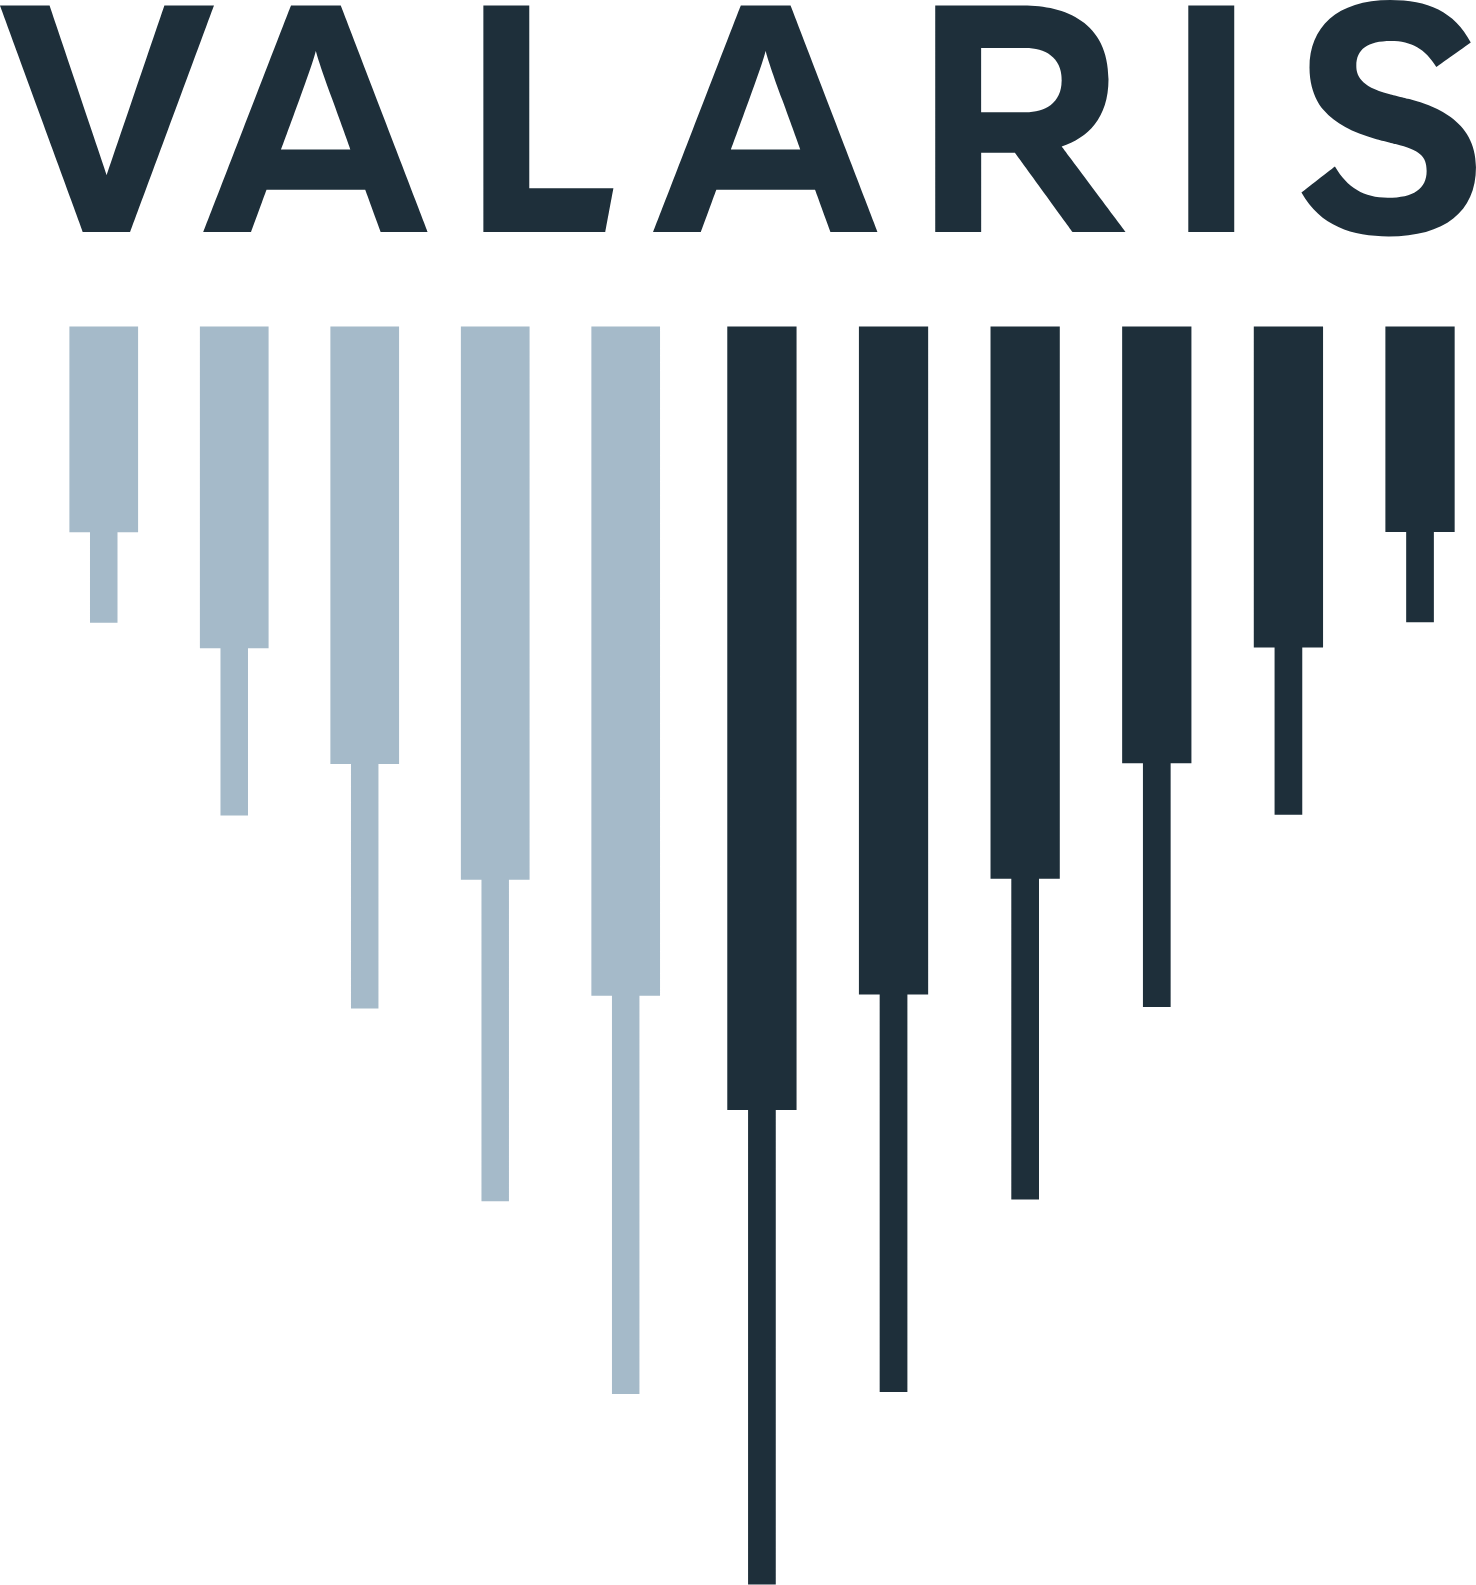 Valaris logo large (transparent PNG)